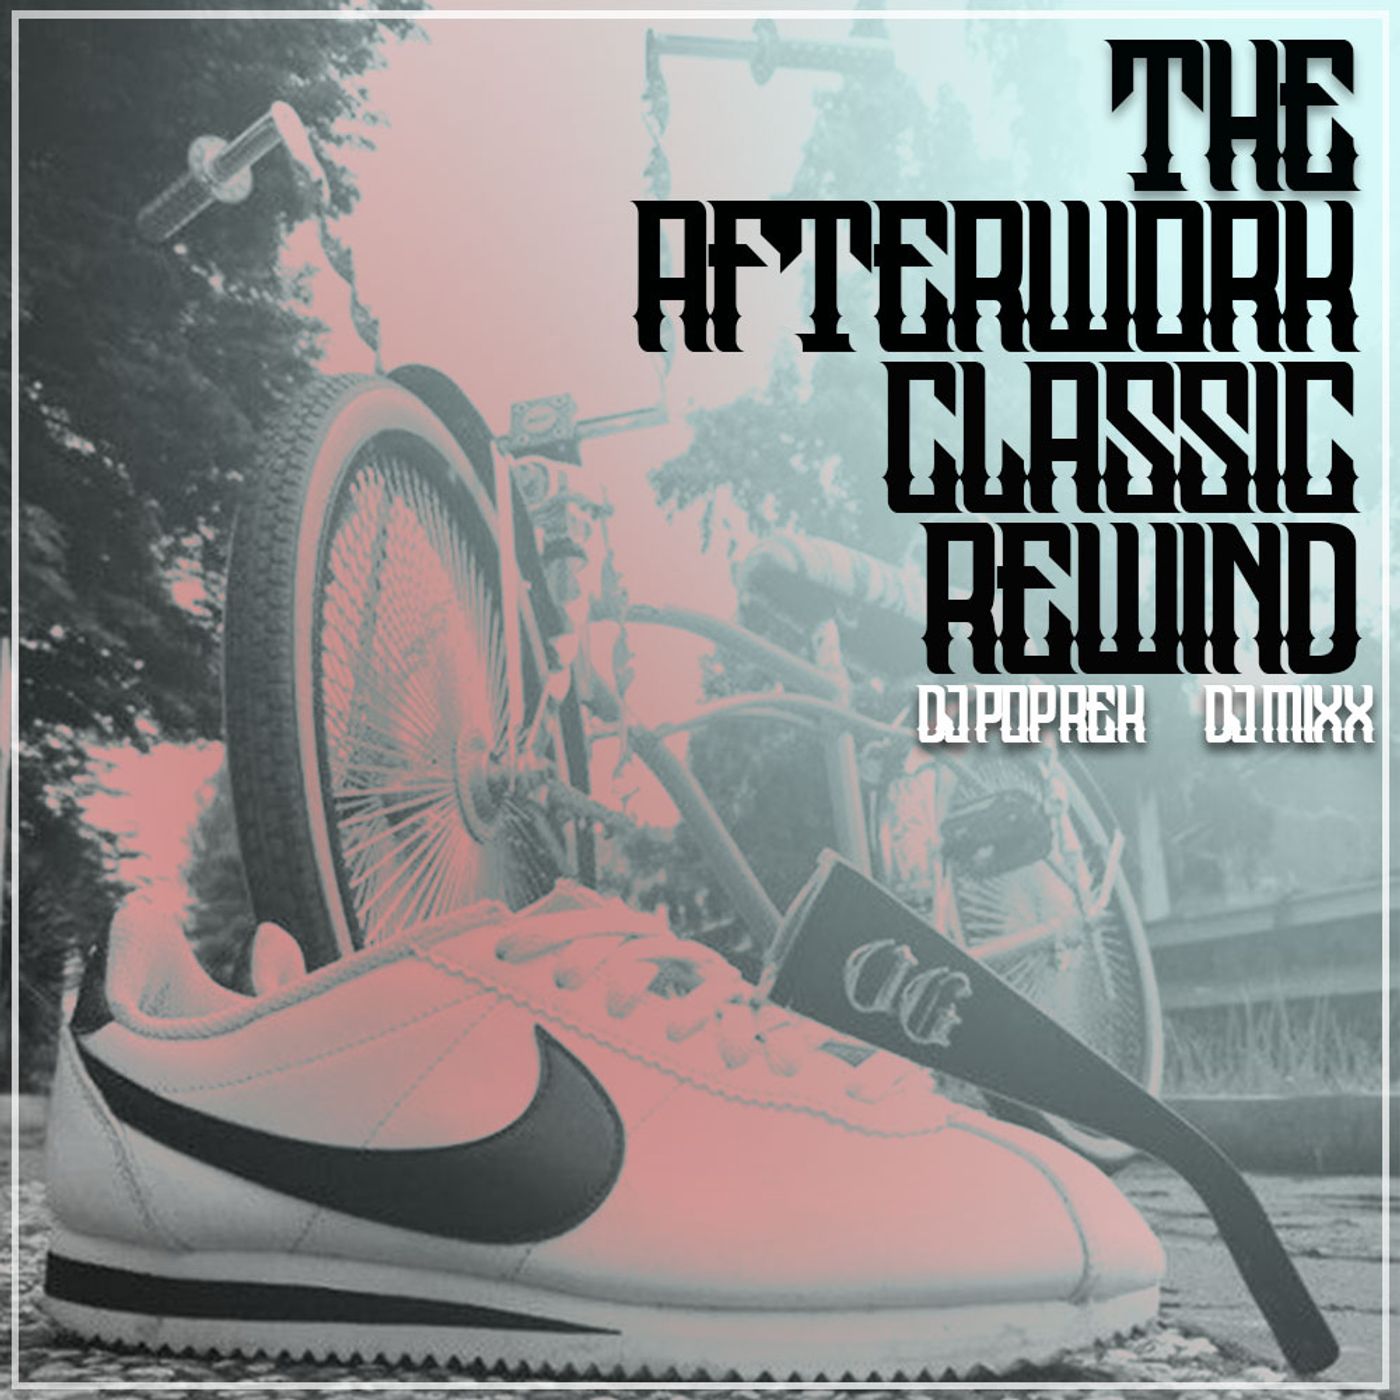 The Afterwork Classic Rewind Ep 116 (08.04.23) w. Dj Pop Rek & Dj Mixx